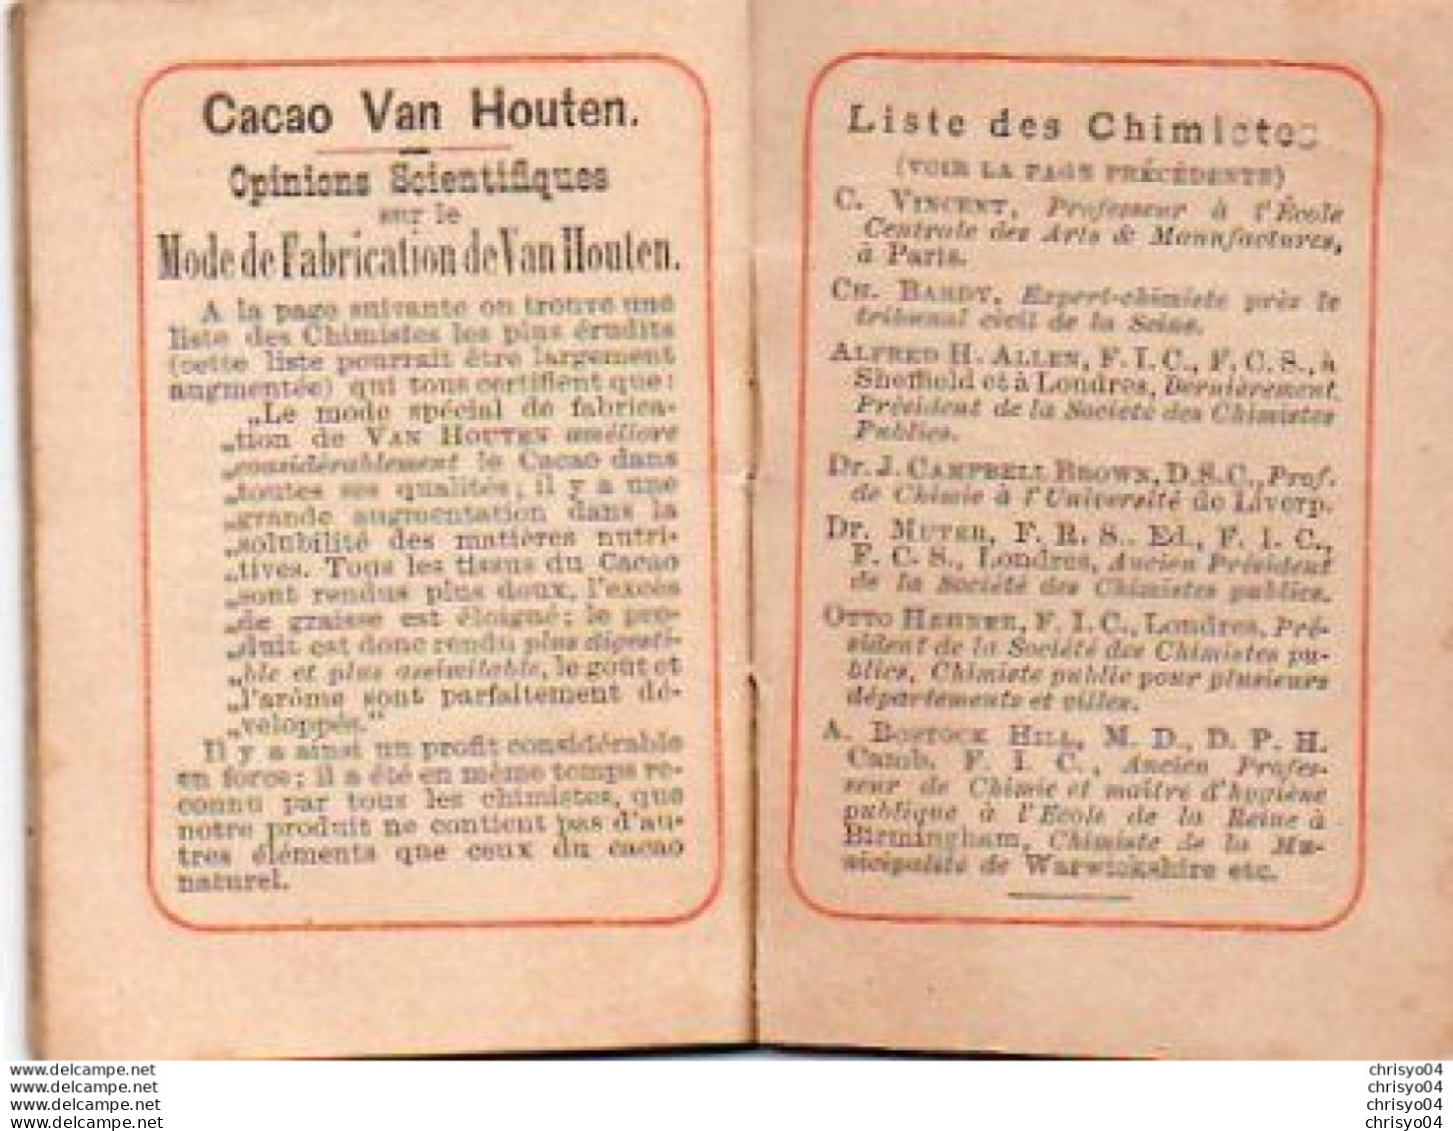 3V9Vo  Calendrier de poche de 1900 Cacao Van Houten